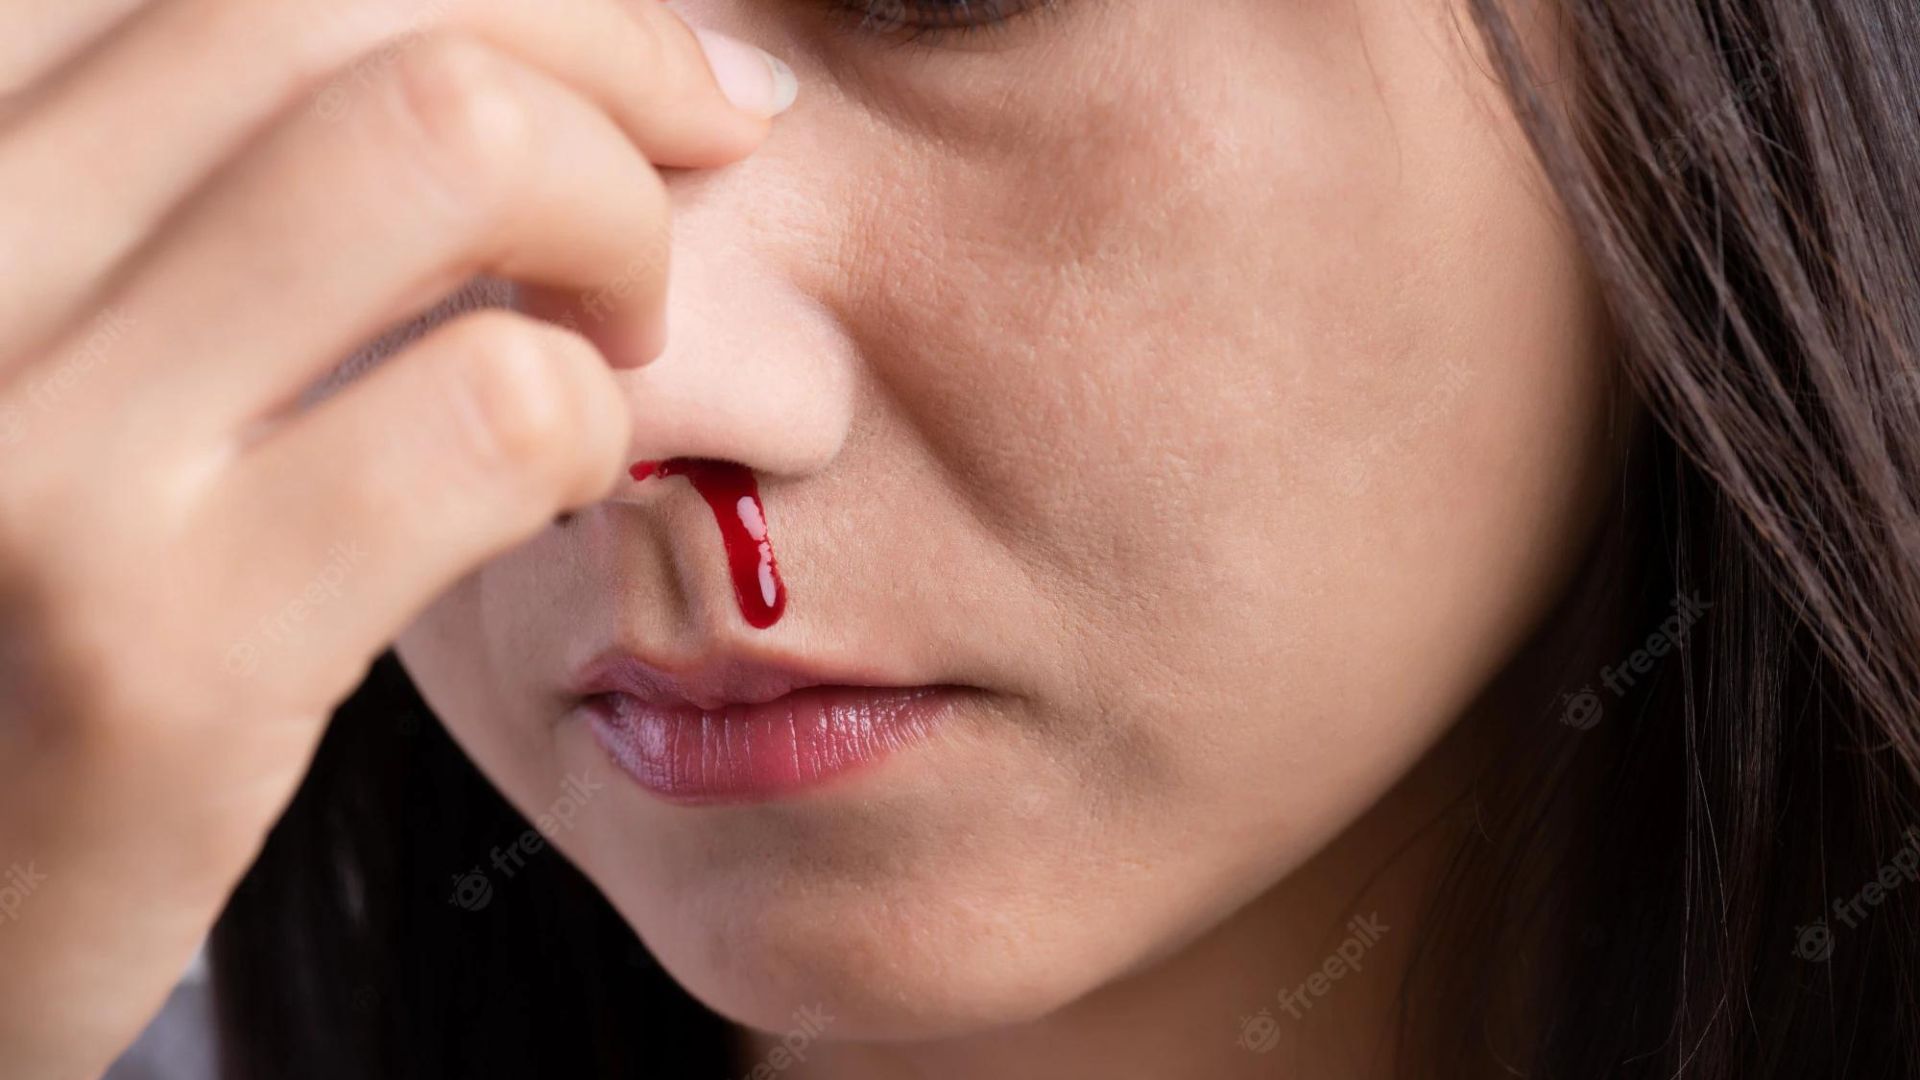 Woman's Nose bleeding